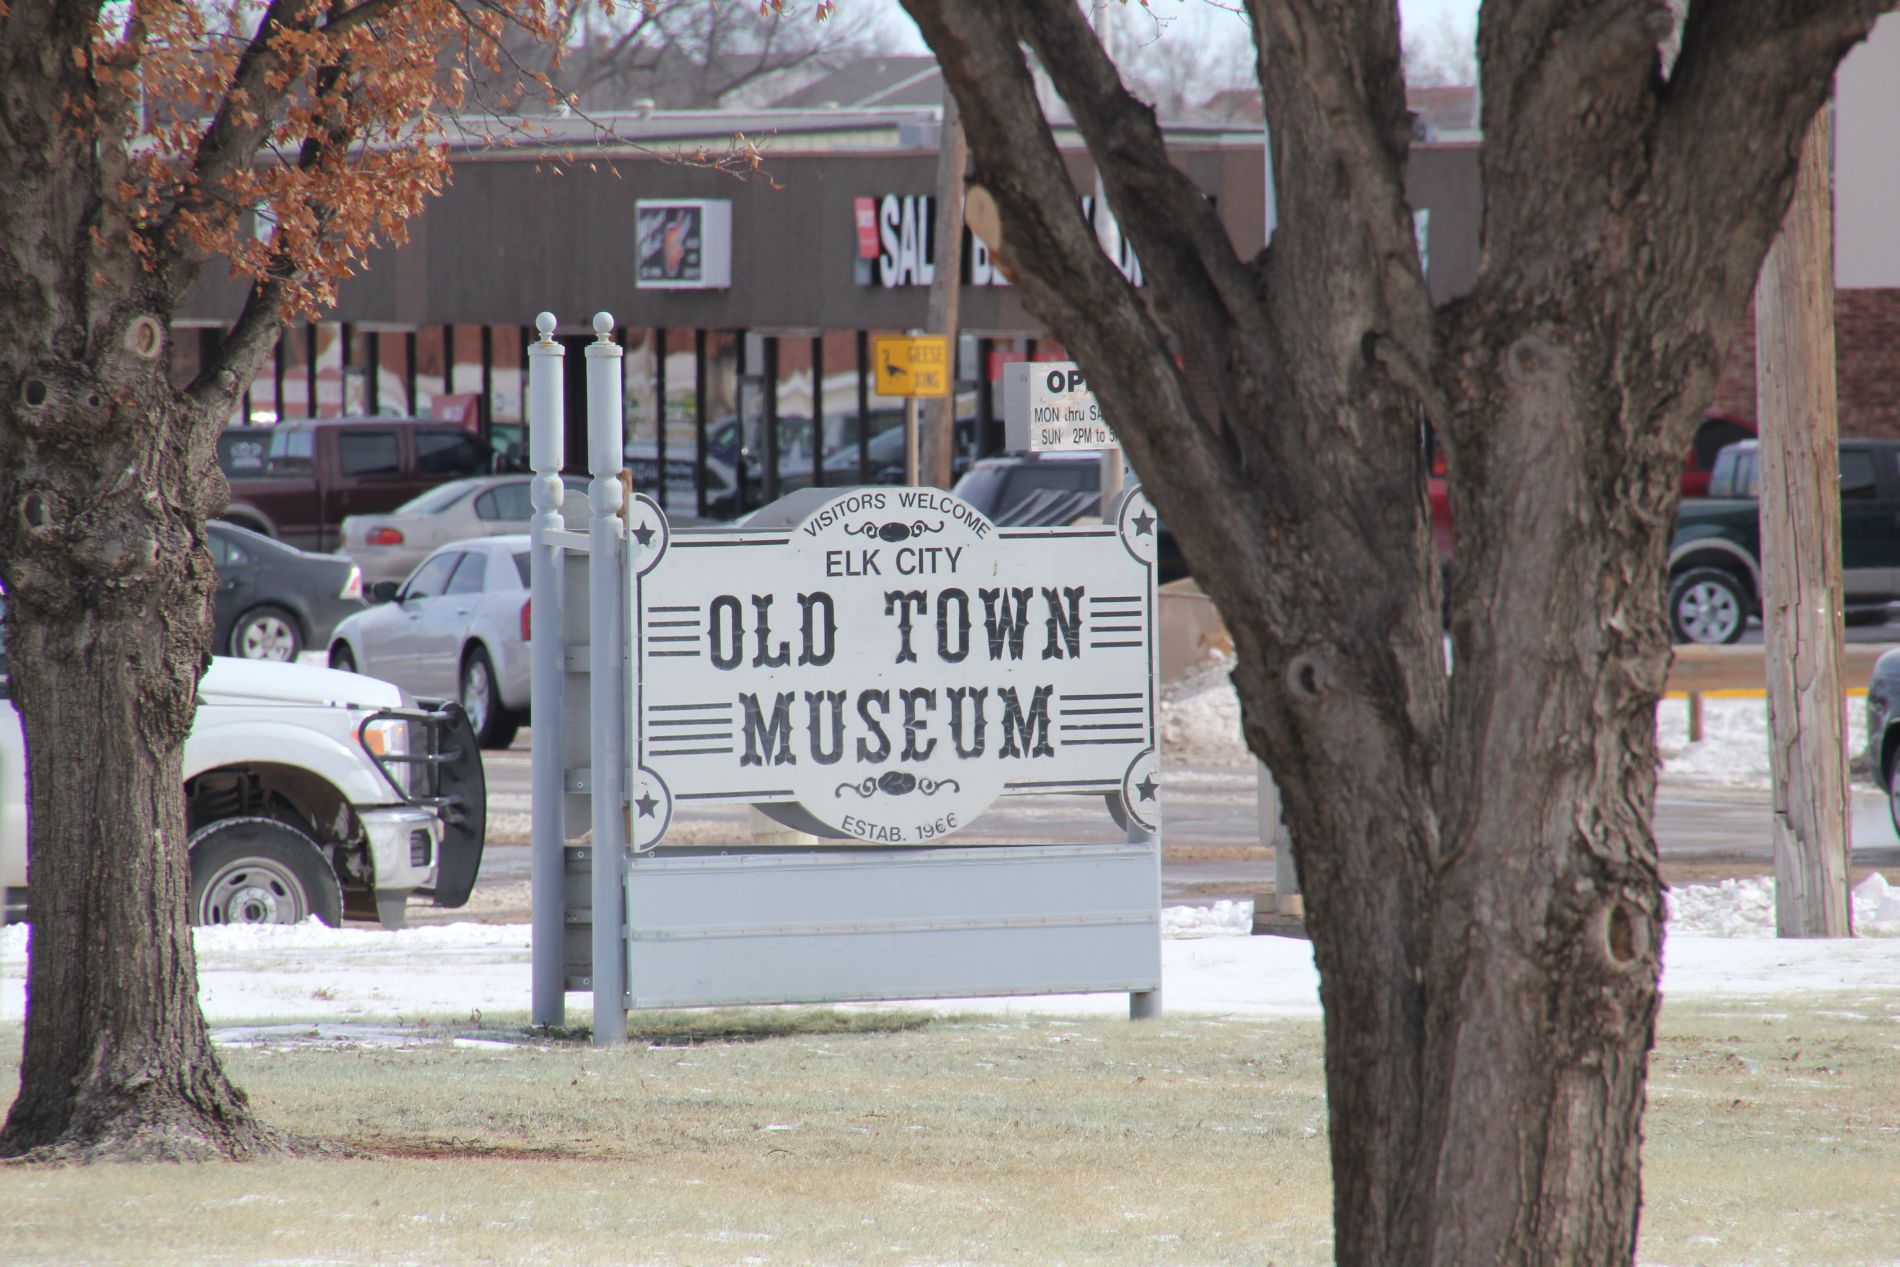 Old Town Museum in Elk City, Oklahoma